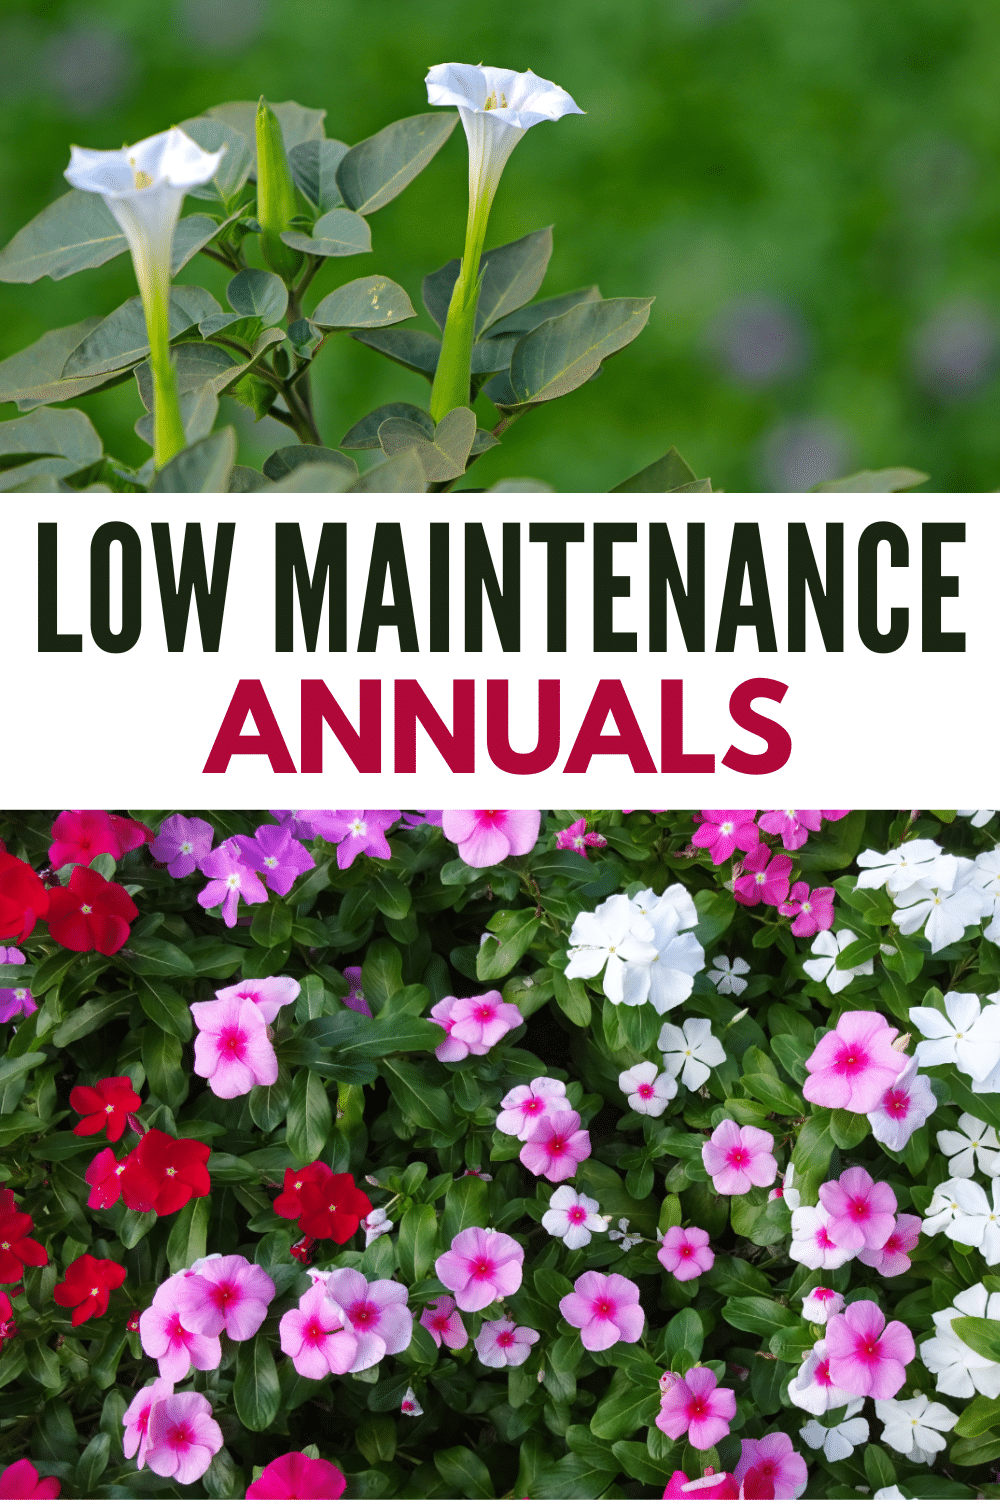 Low maintenance annuals.